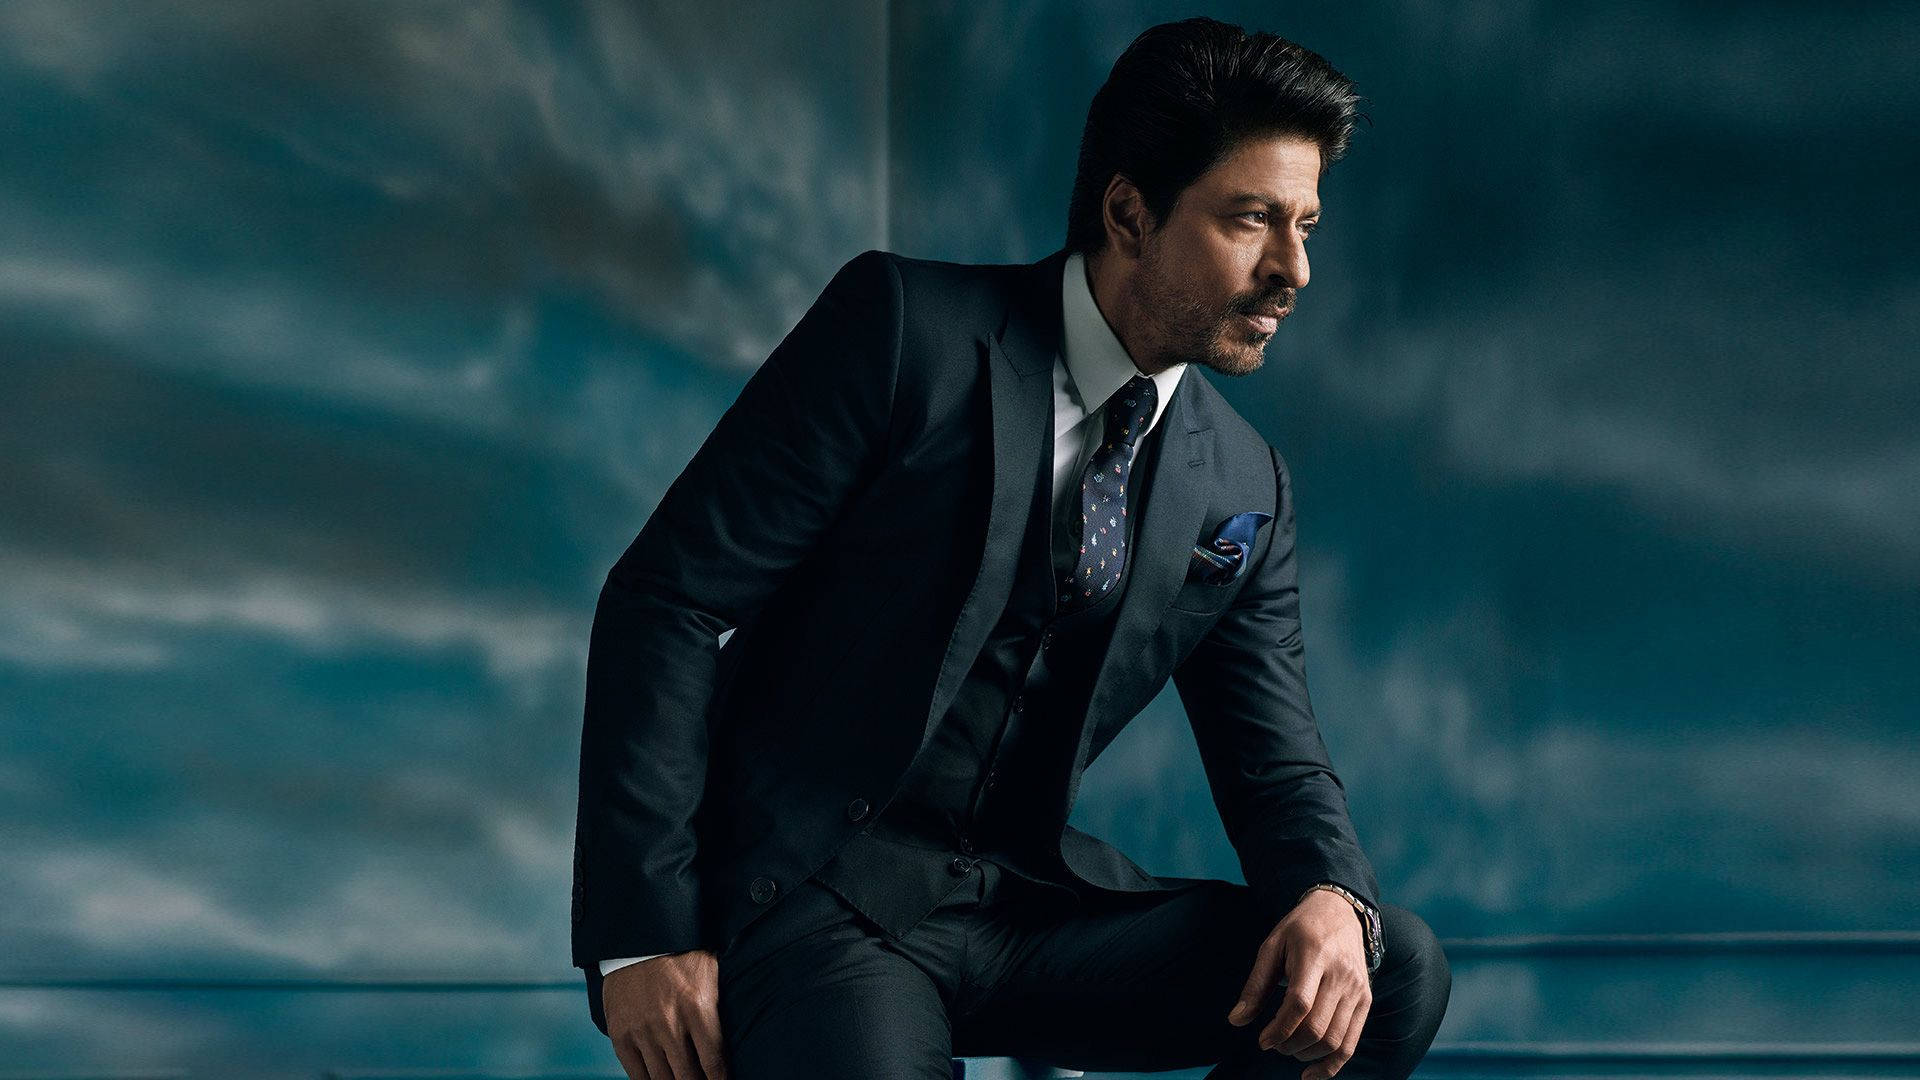 Shah Rukh Khan GQ Tuxedo Outfit Wallpaper